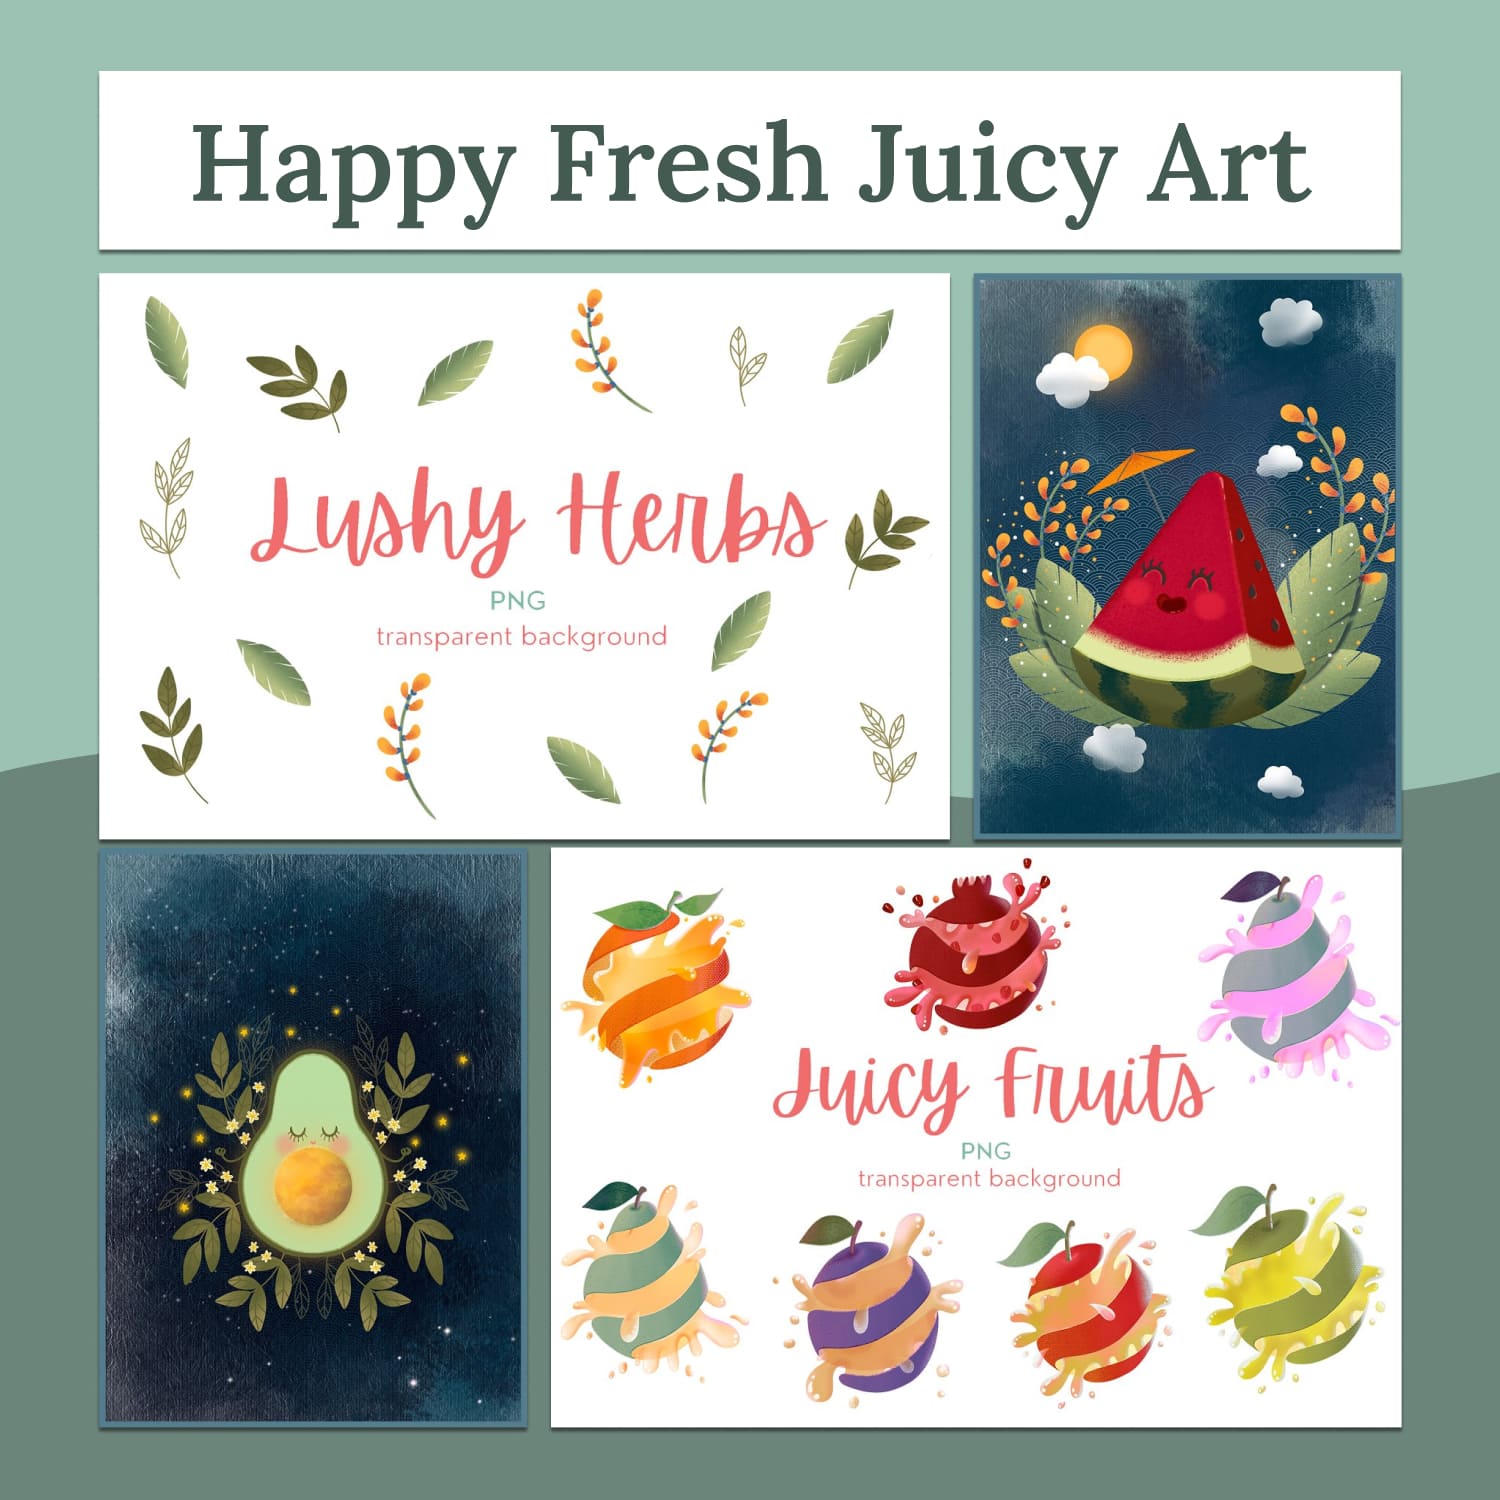 Happy fresh juicy art - main image preview.